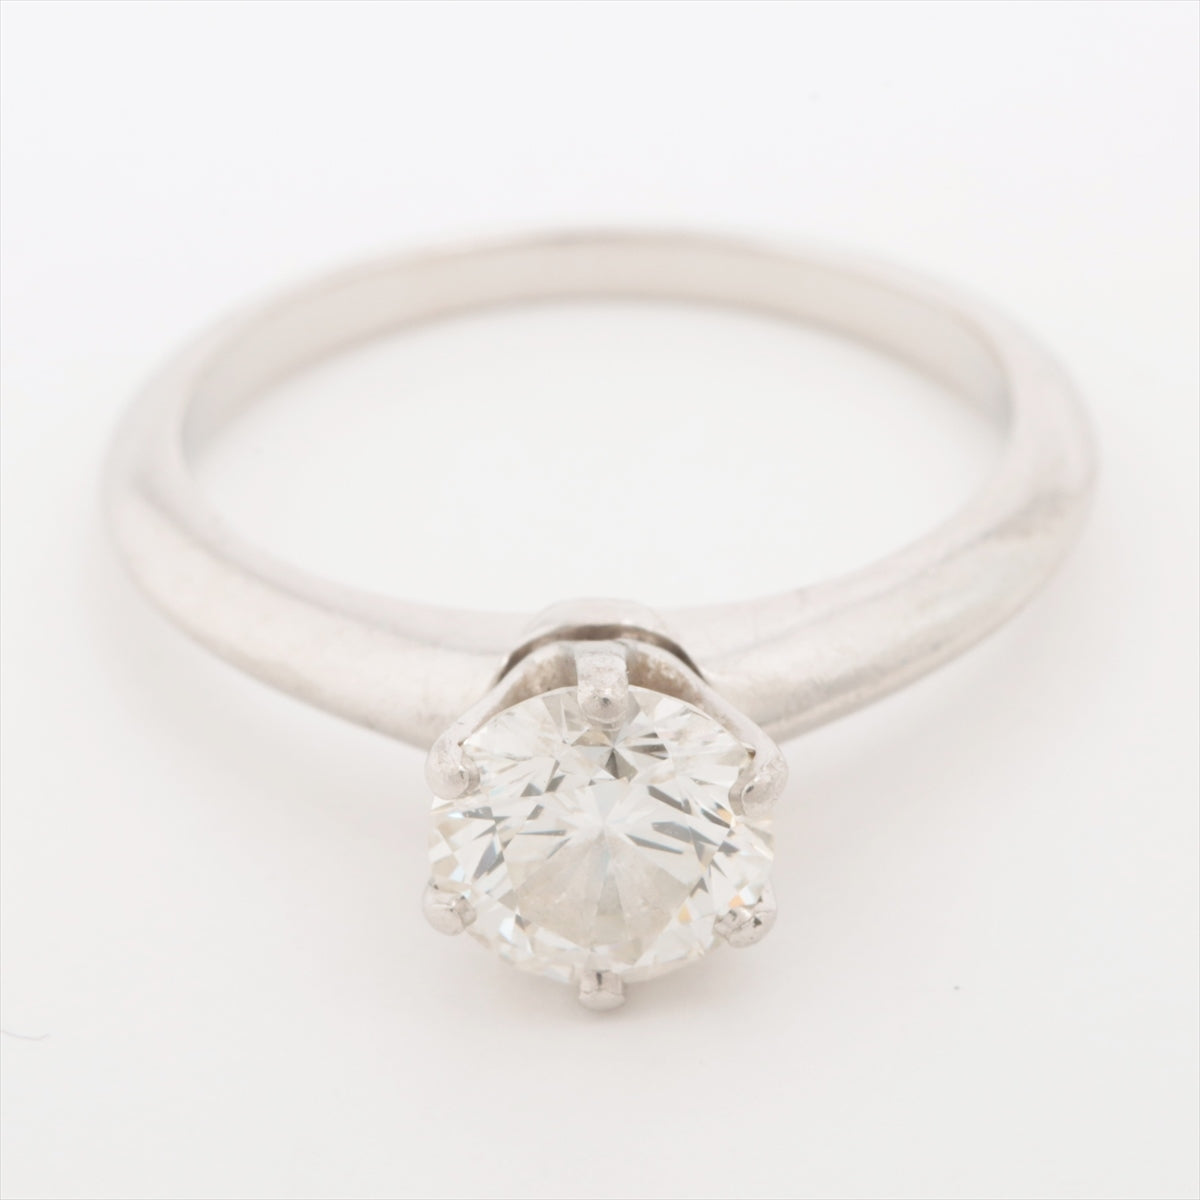 Tiffany Solitaire diamond Ring Pt950 4.9g 1.08 I VVS1 EX NONE